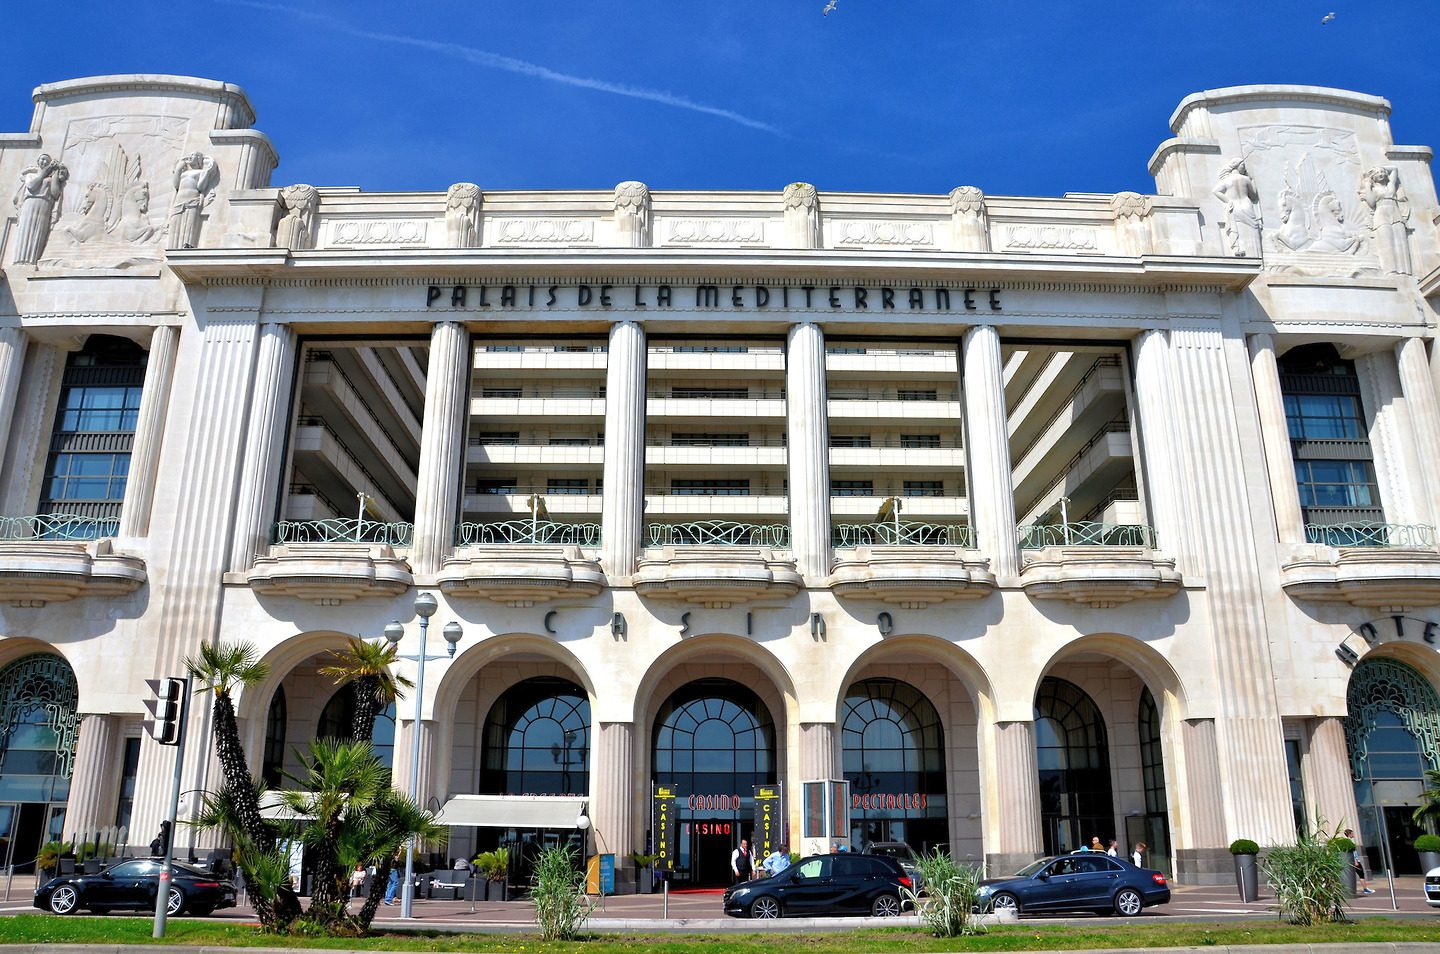 The gorgeous Casino Palais de la Mediterranee in Nice, France